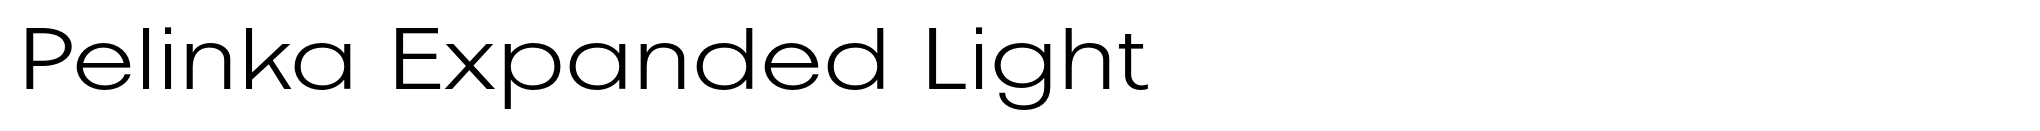 Pelinka Expanded Light image